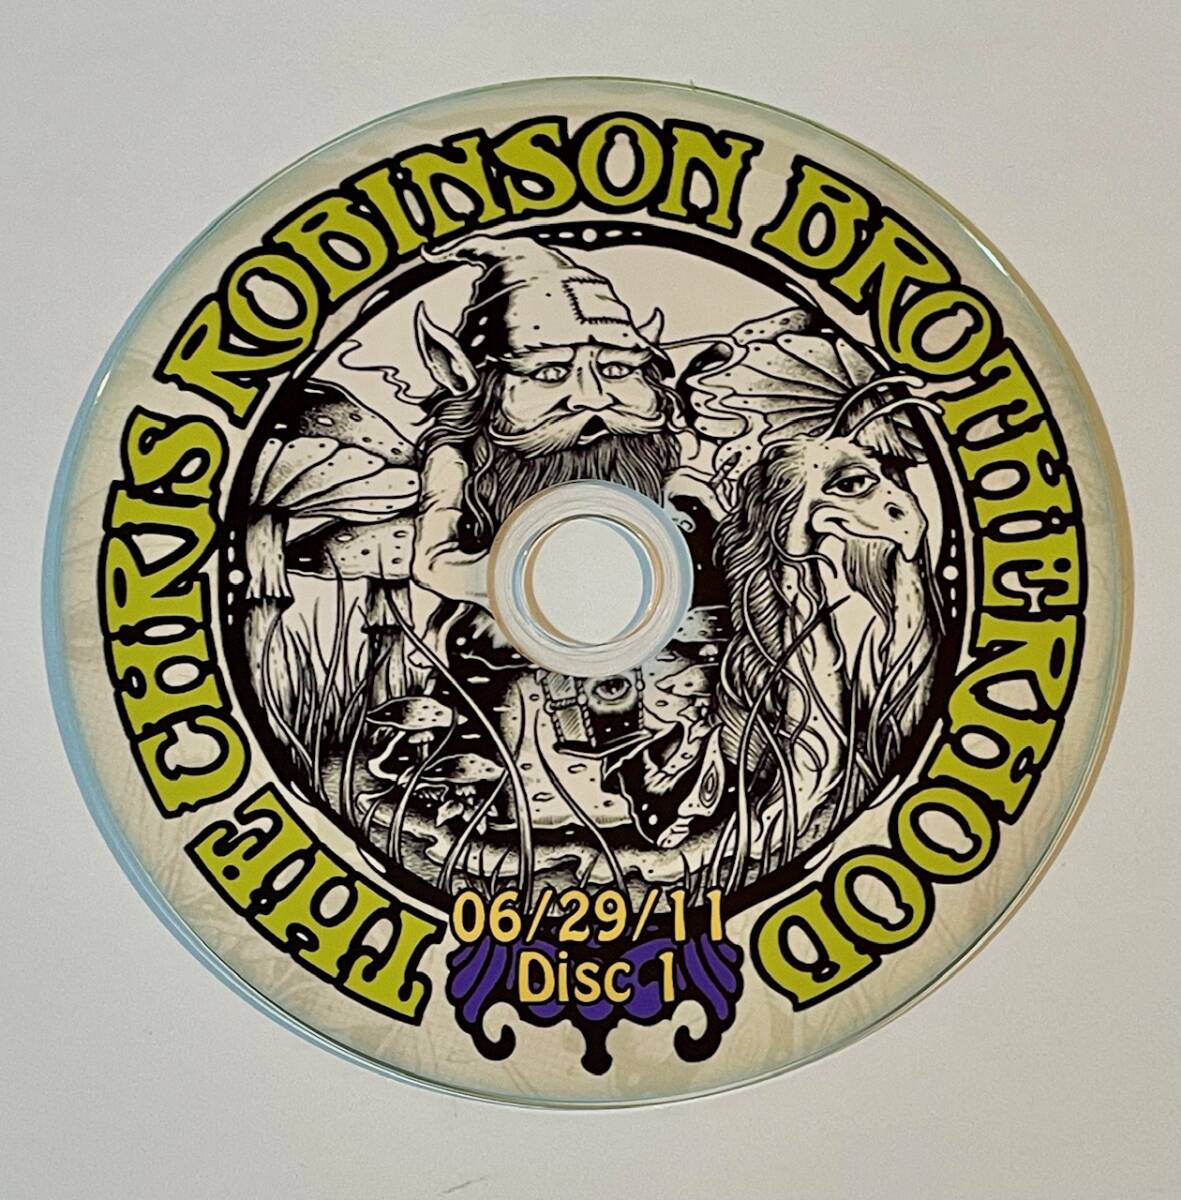 [3CD-R] Chris Robinson Brotherhood CRB Roadshow - 29 June 2011 - Felton, CA Black Crowes クリス・ロビンソン ブラック・クロウズ_画像4